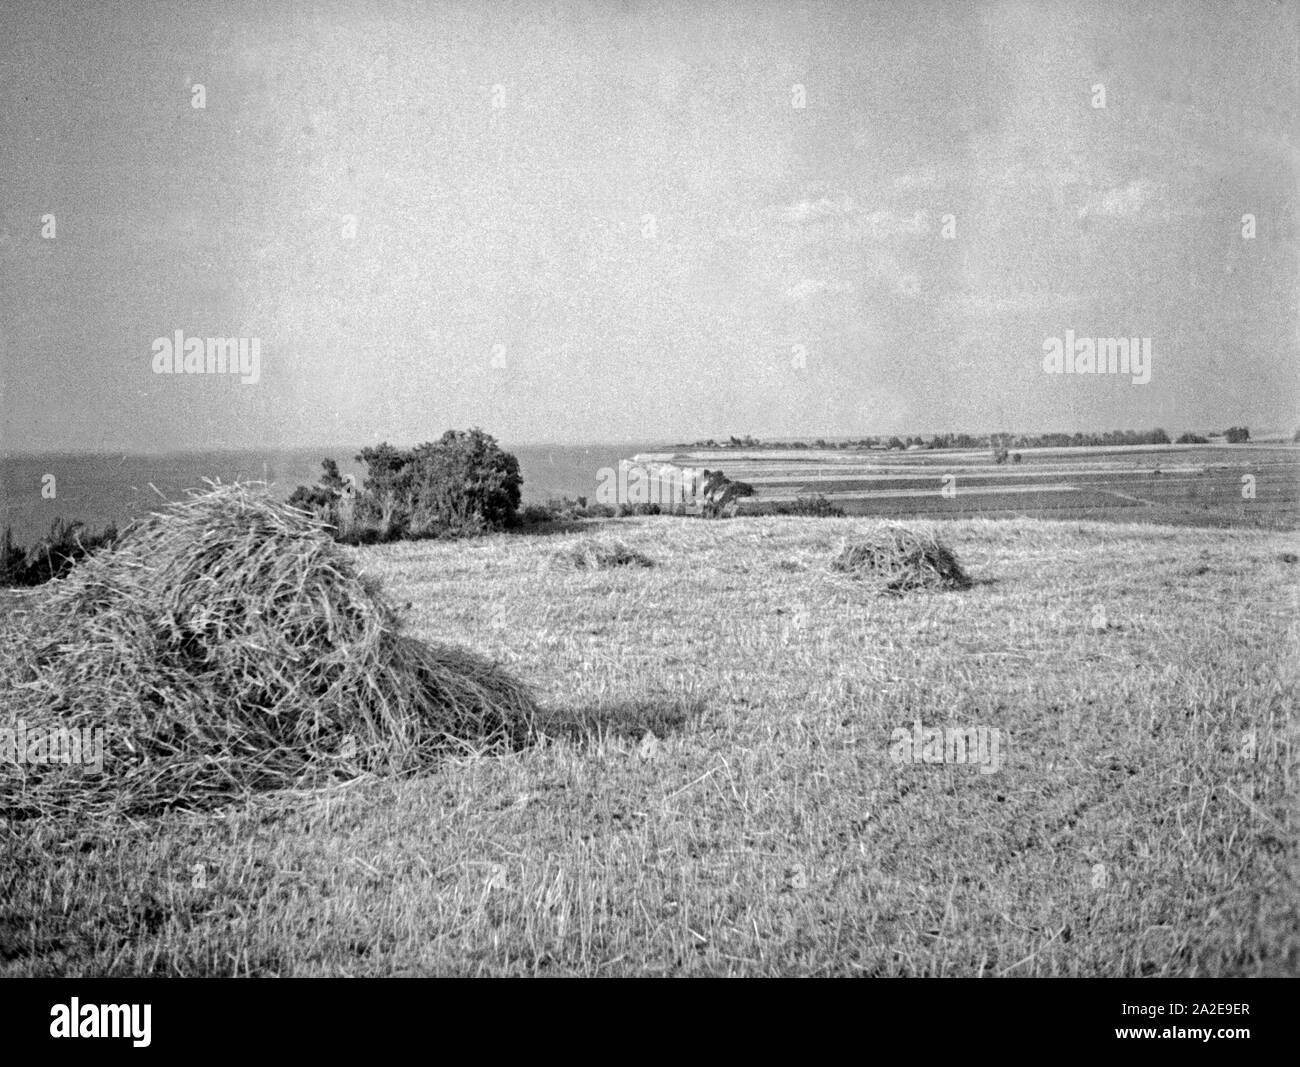 Landschaft bei Kahlholz am Frischen Haff in Ostpreußen, 1930er Jahre. Landscape near Kahlholz at Vistula Lagoon, East Prussia, 1930s. Stock Photo